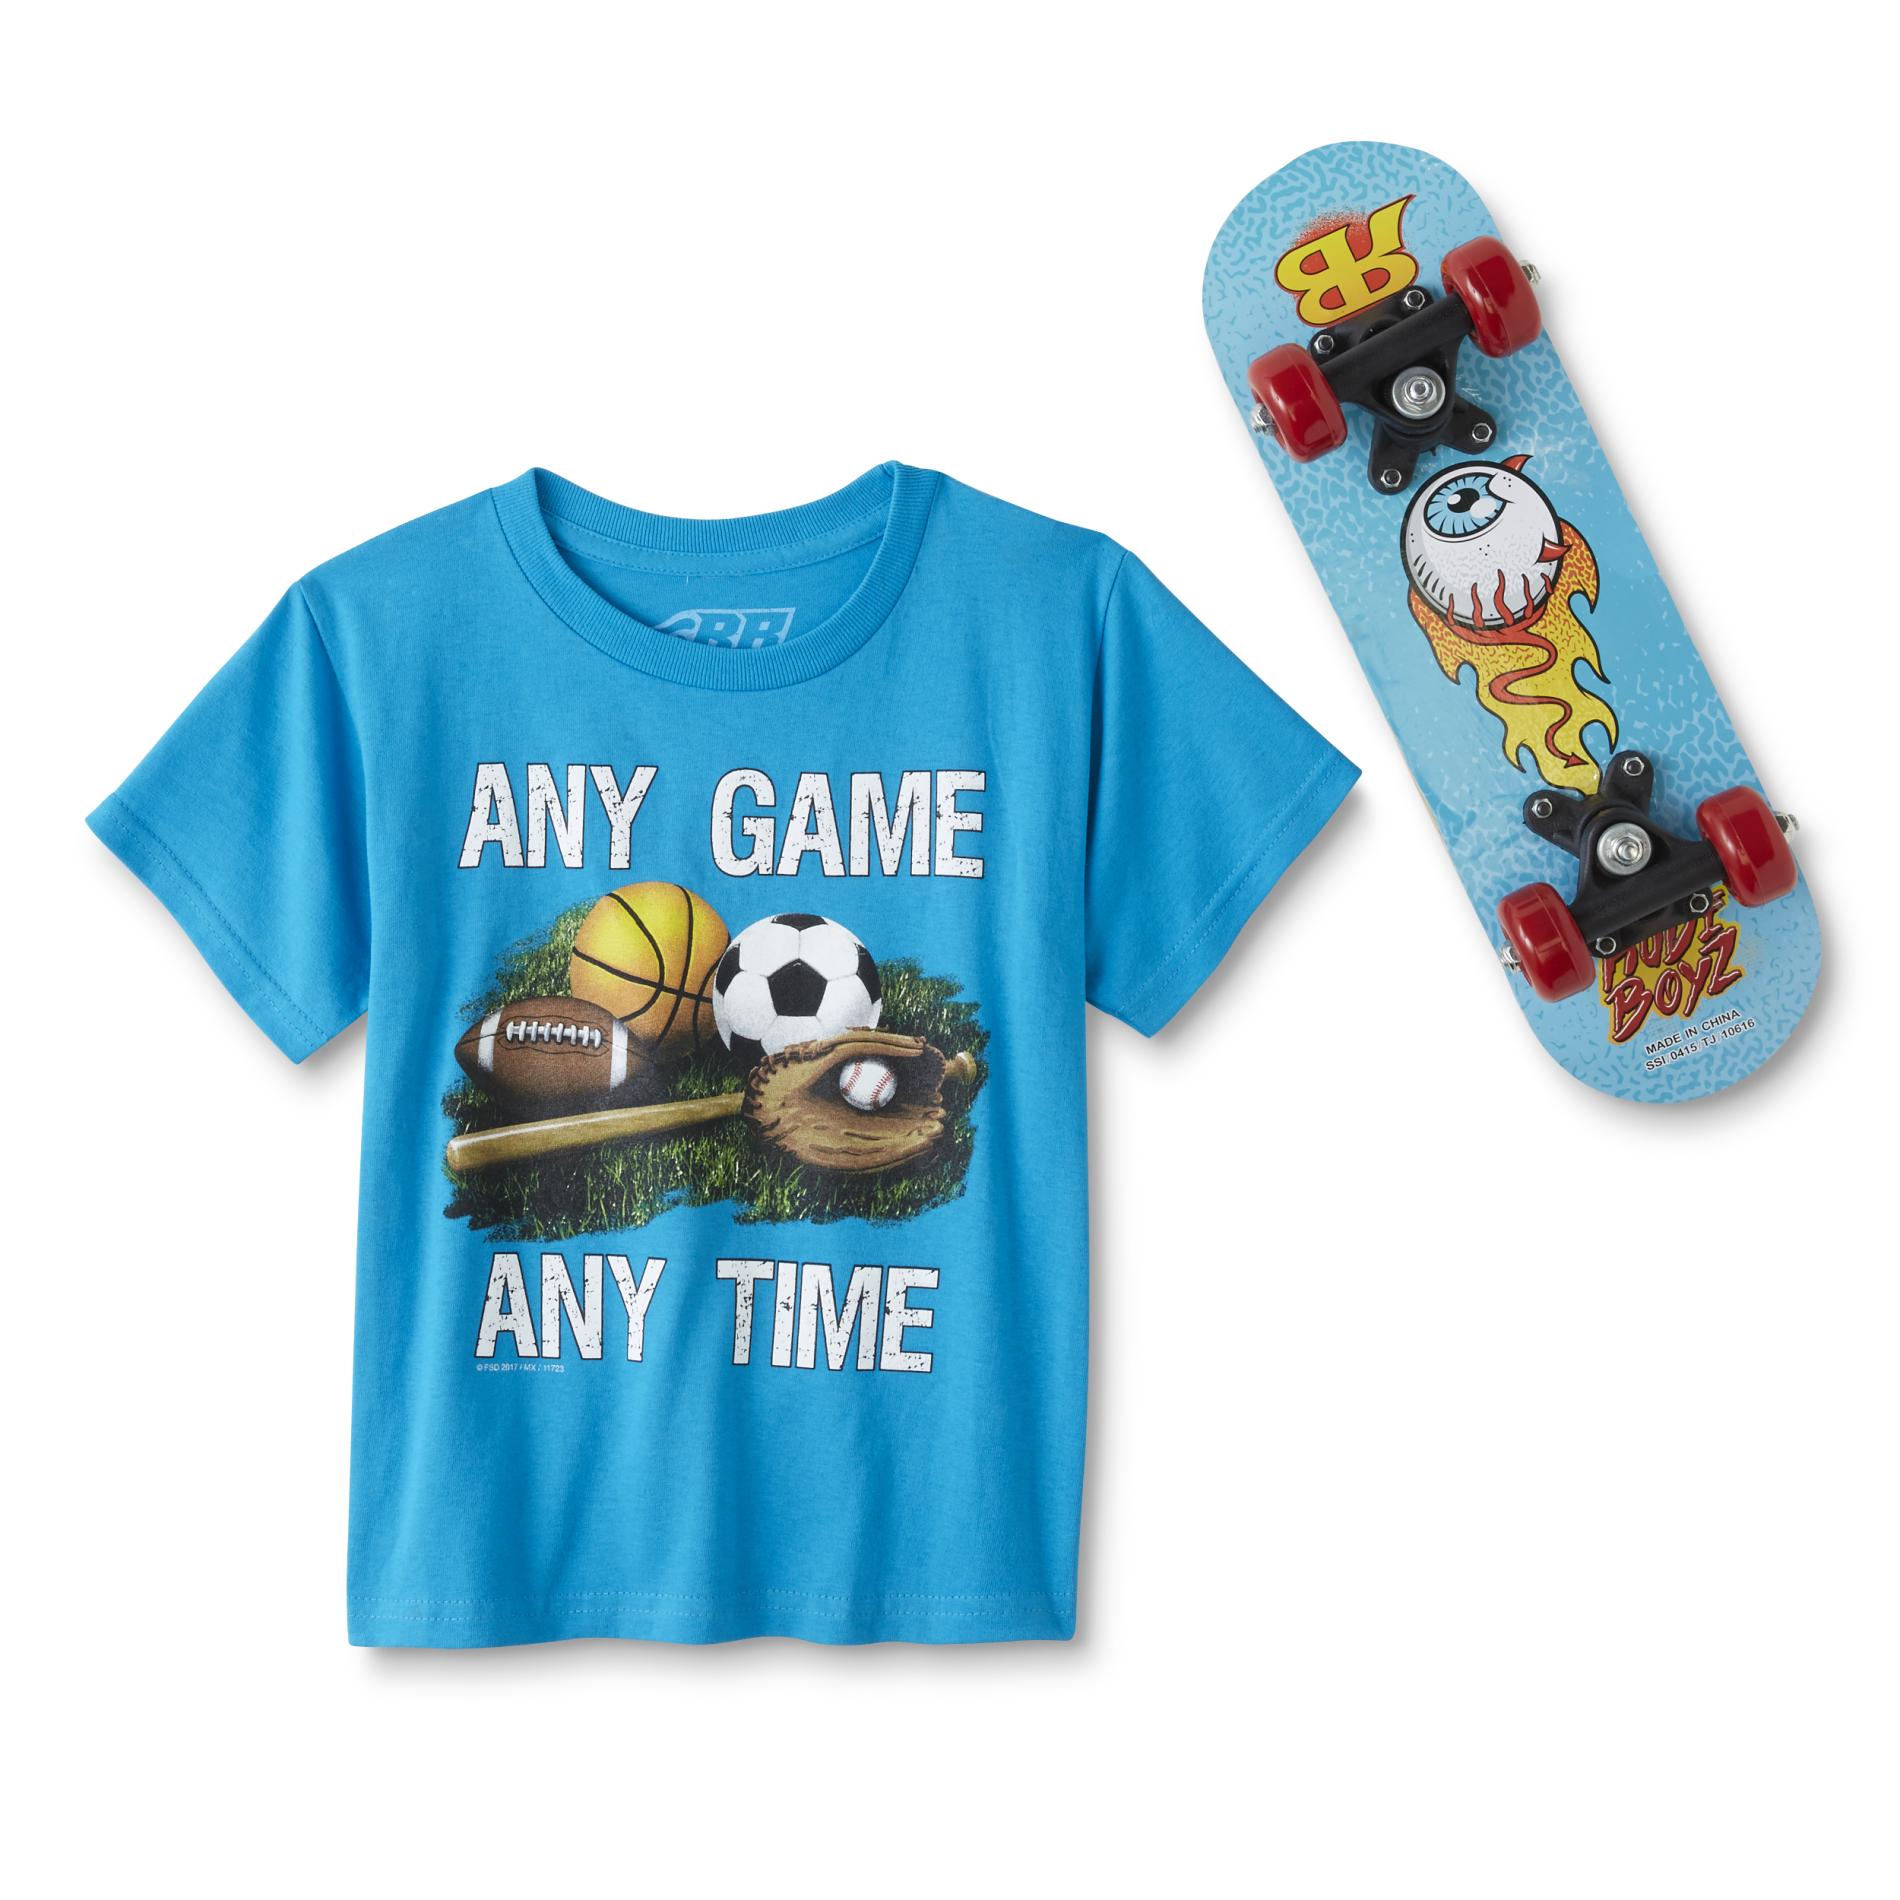 Rude Boyz Boys' Graphic T-Shirt & Skateboard Toy